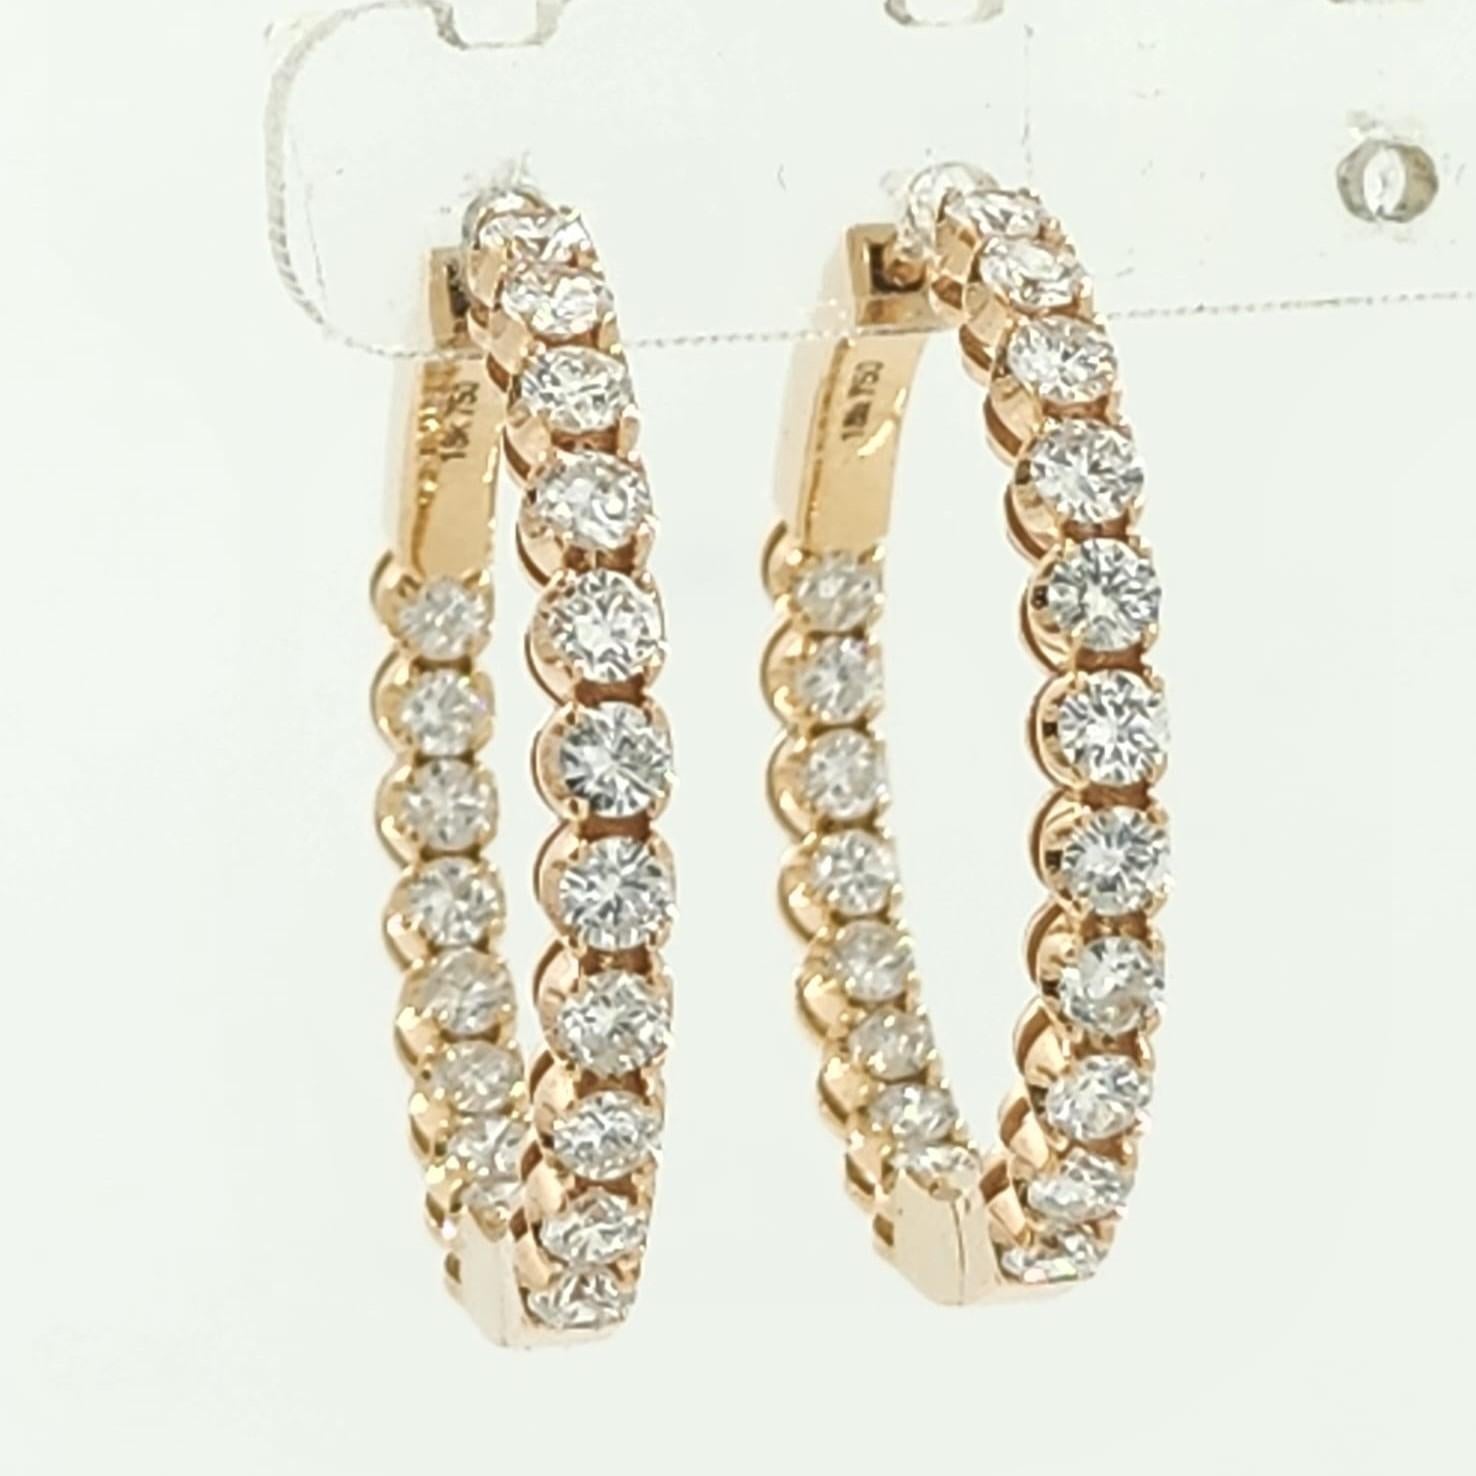 Round Cut 1.51Carat Diamond Hoop Earrings in 18 Karat Rose Gold For Sale